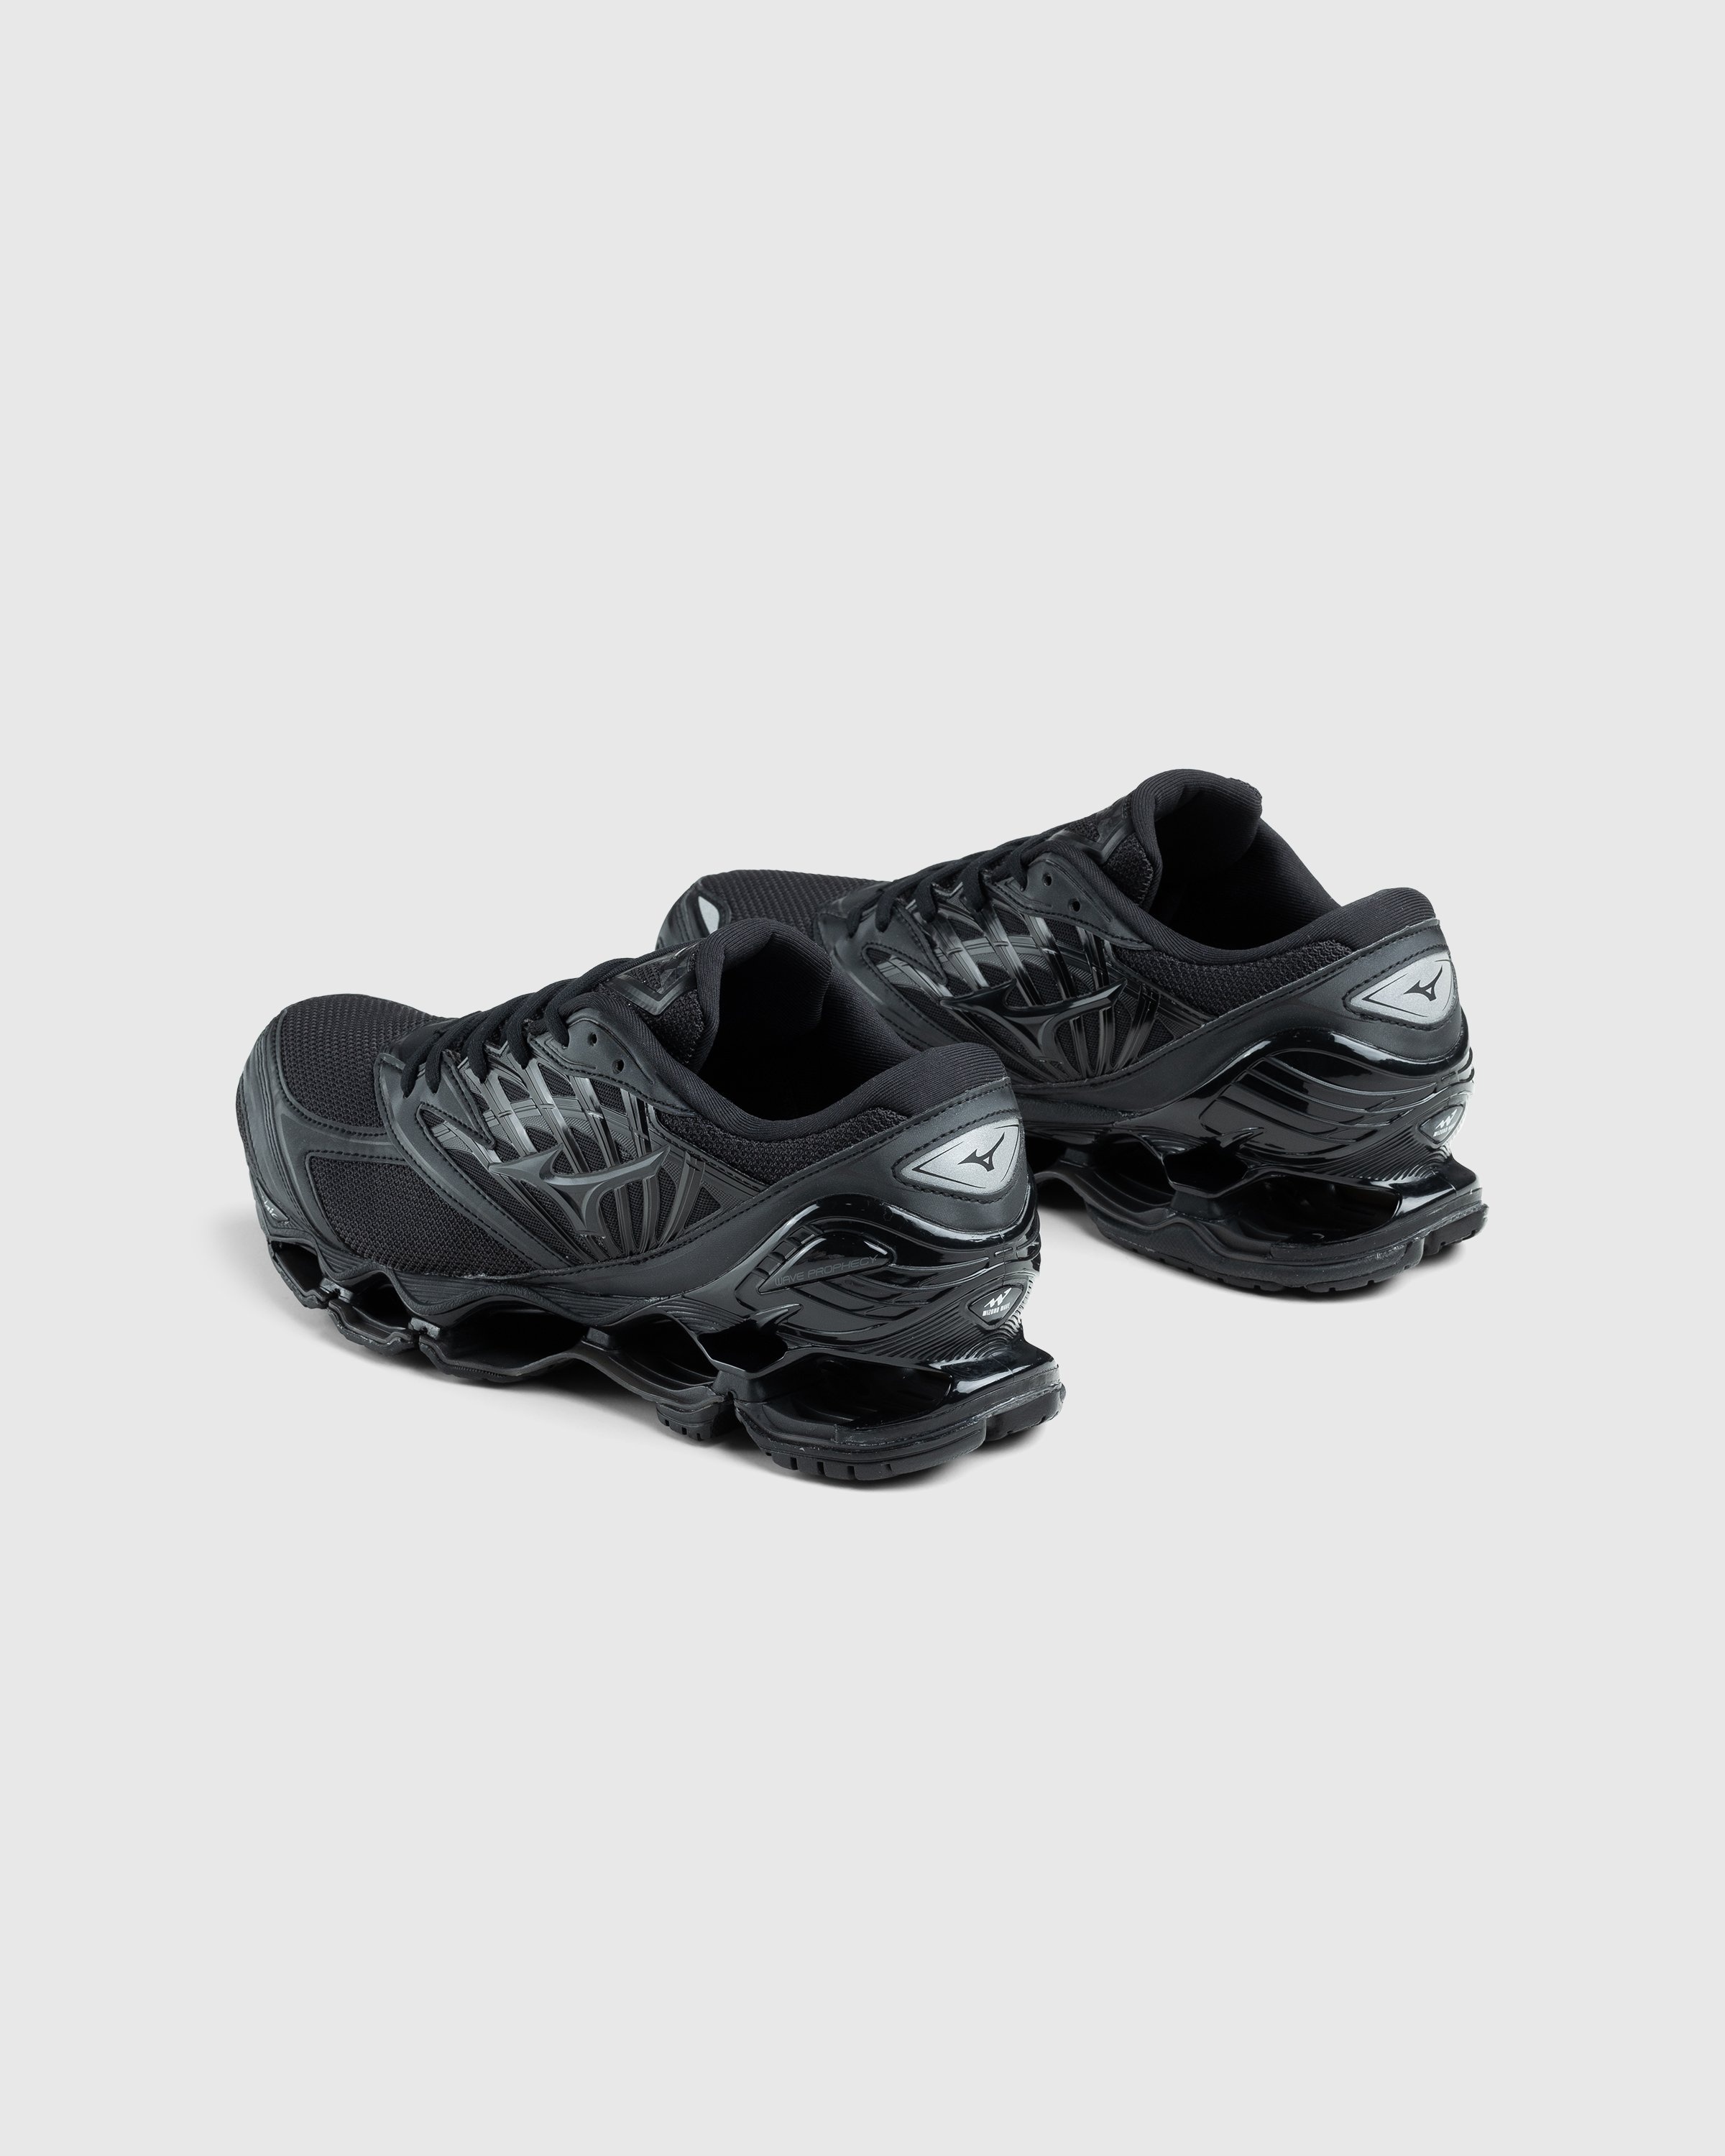 Mizuno – Wave Prophecy LS Black - Low Top Sneakers - Black - Image 4